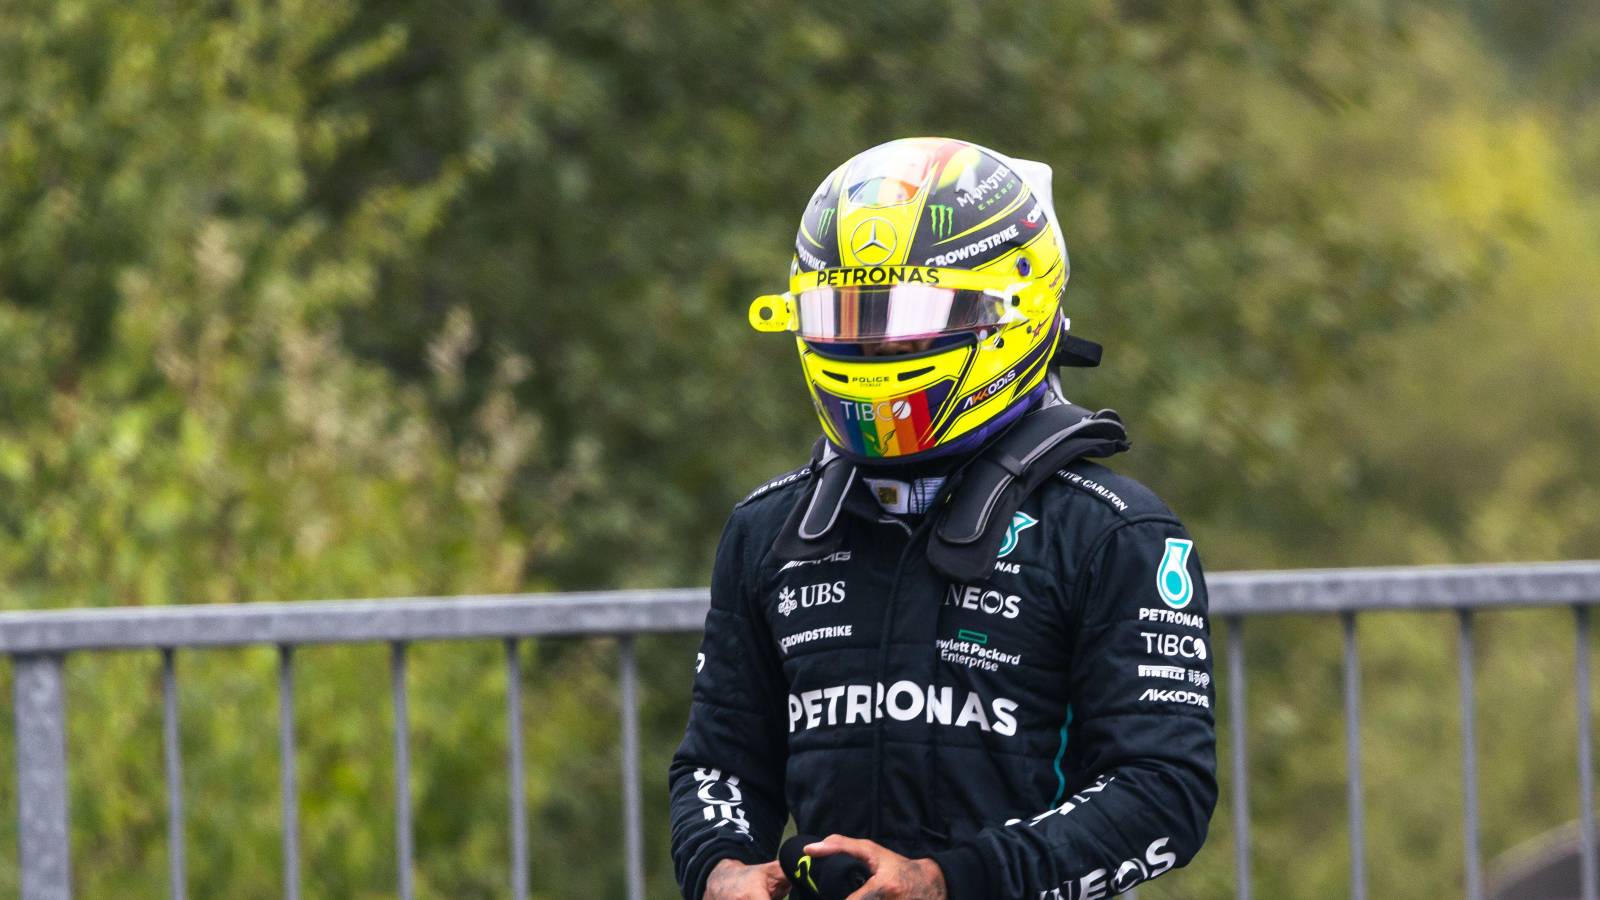 Lewis Hamilton in his Mercedes gear and helmet. Belgium, August 2022.